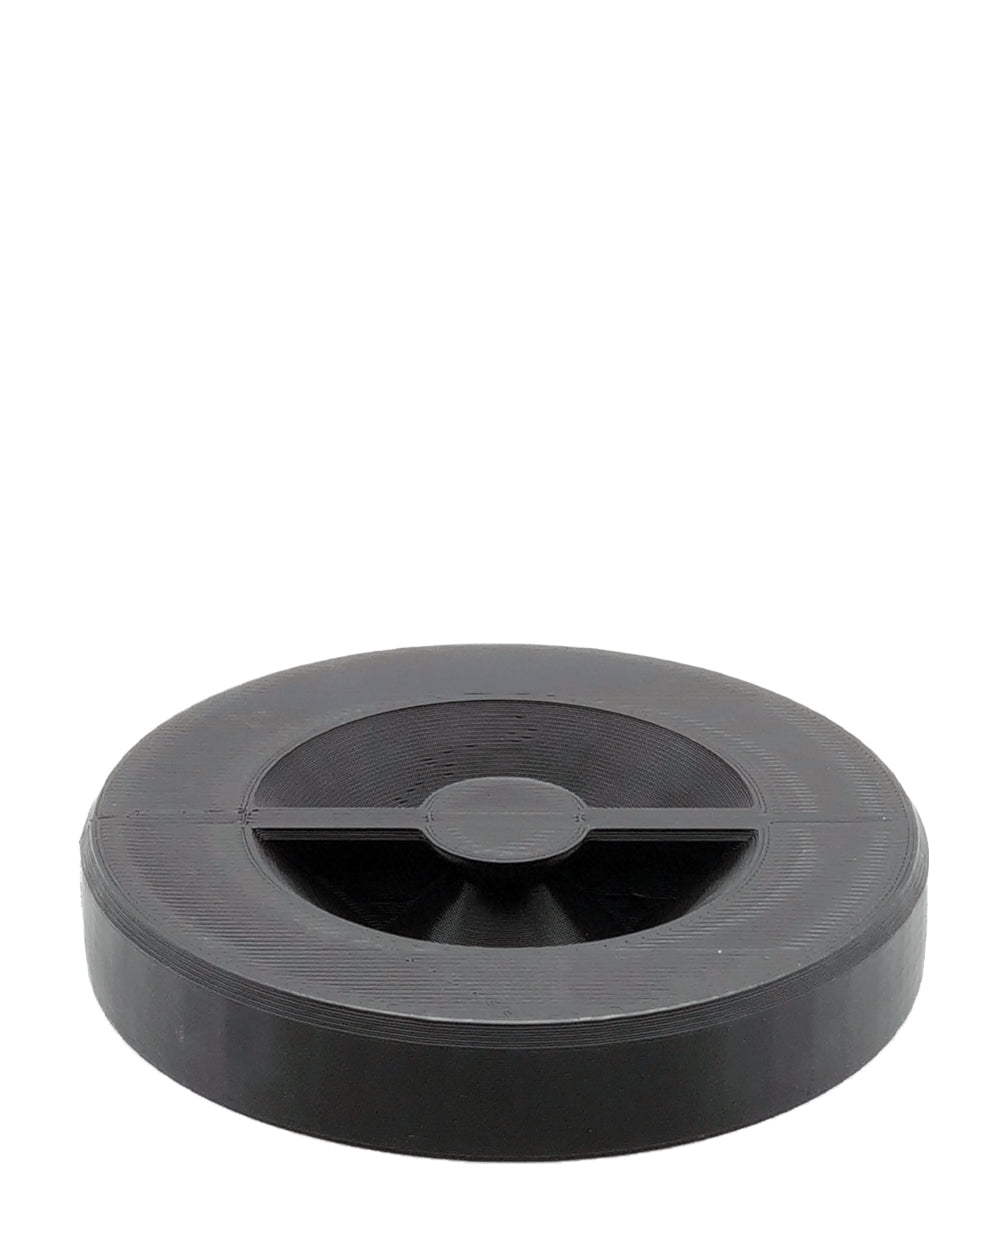 HUMBOLDT | Black Pre-Rolled Cones Filling Machine Cartridge 84mm | Fill 121 Cones Per Run - 3